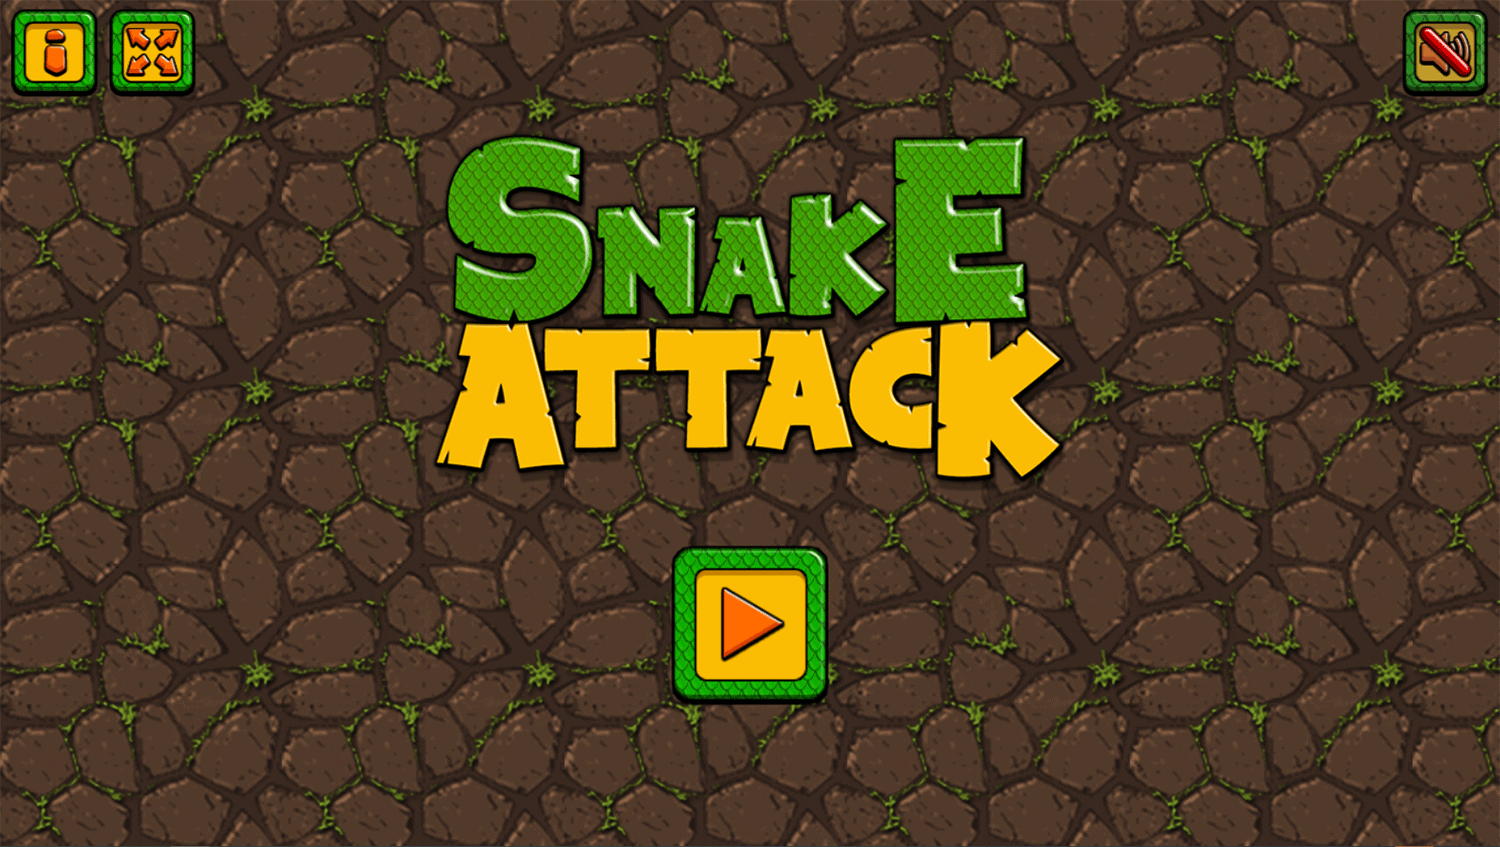 Snake Attack Welcome Screen Screenshot.